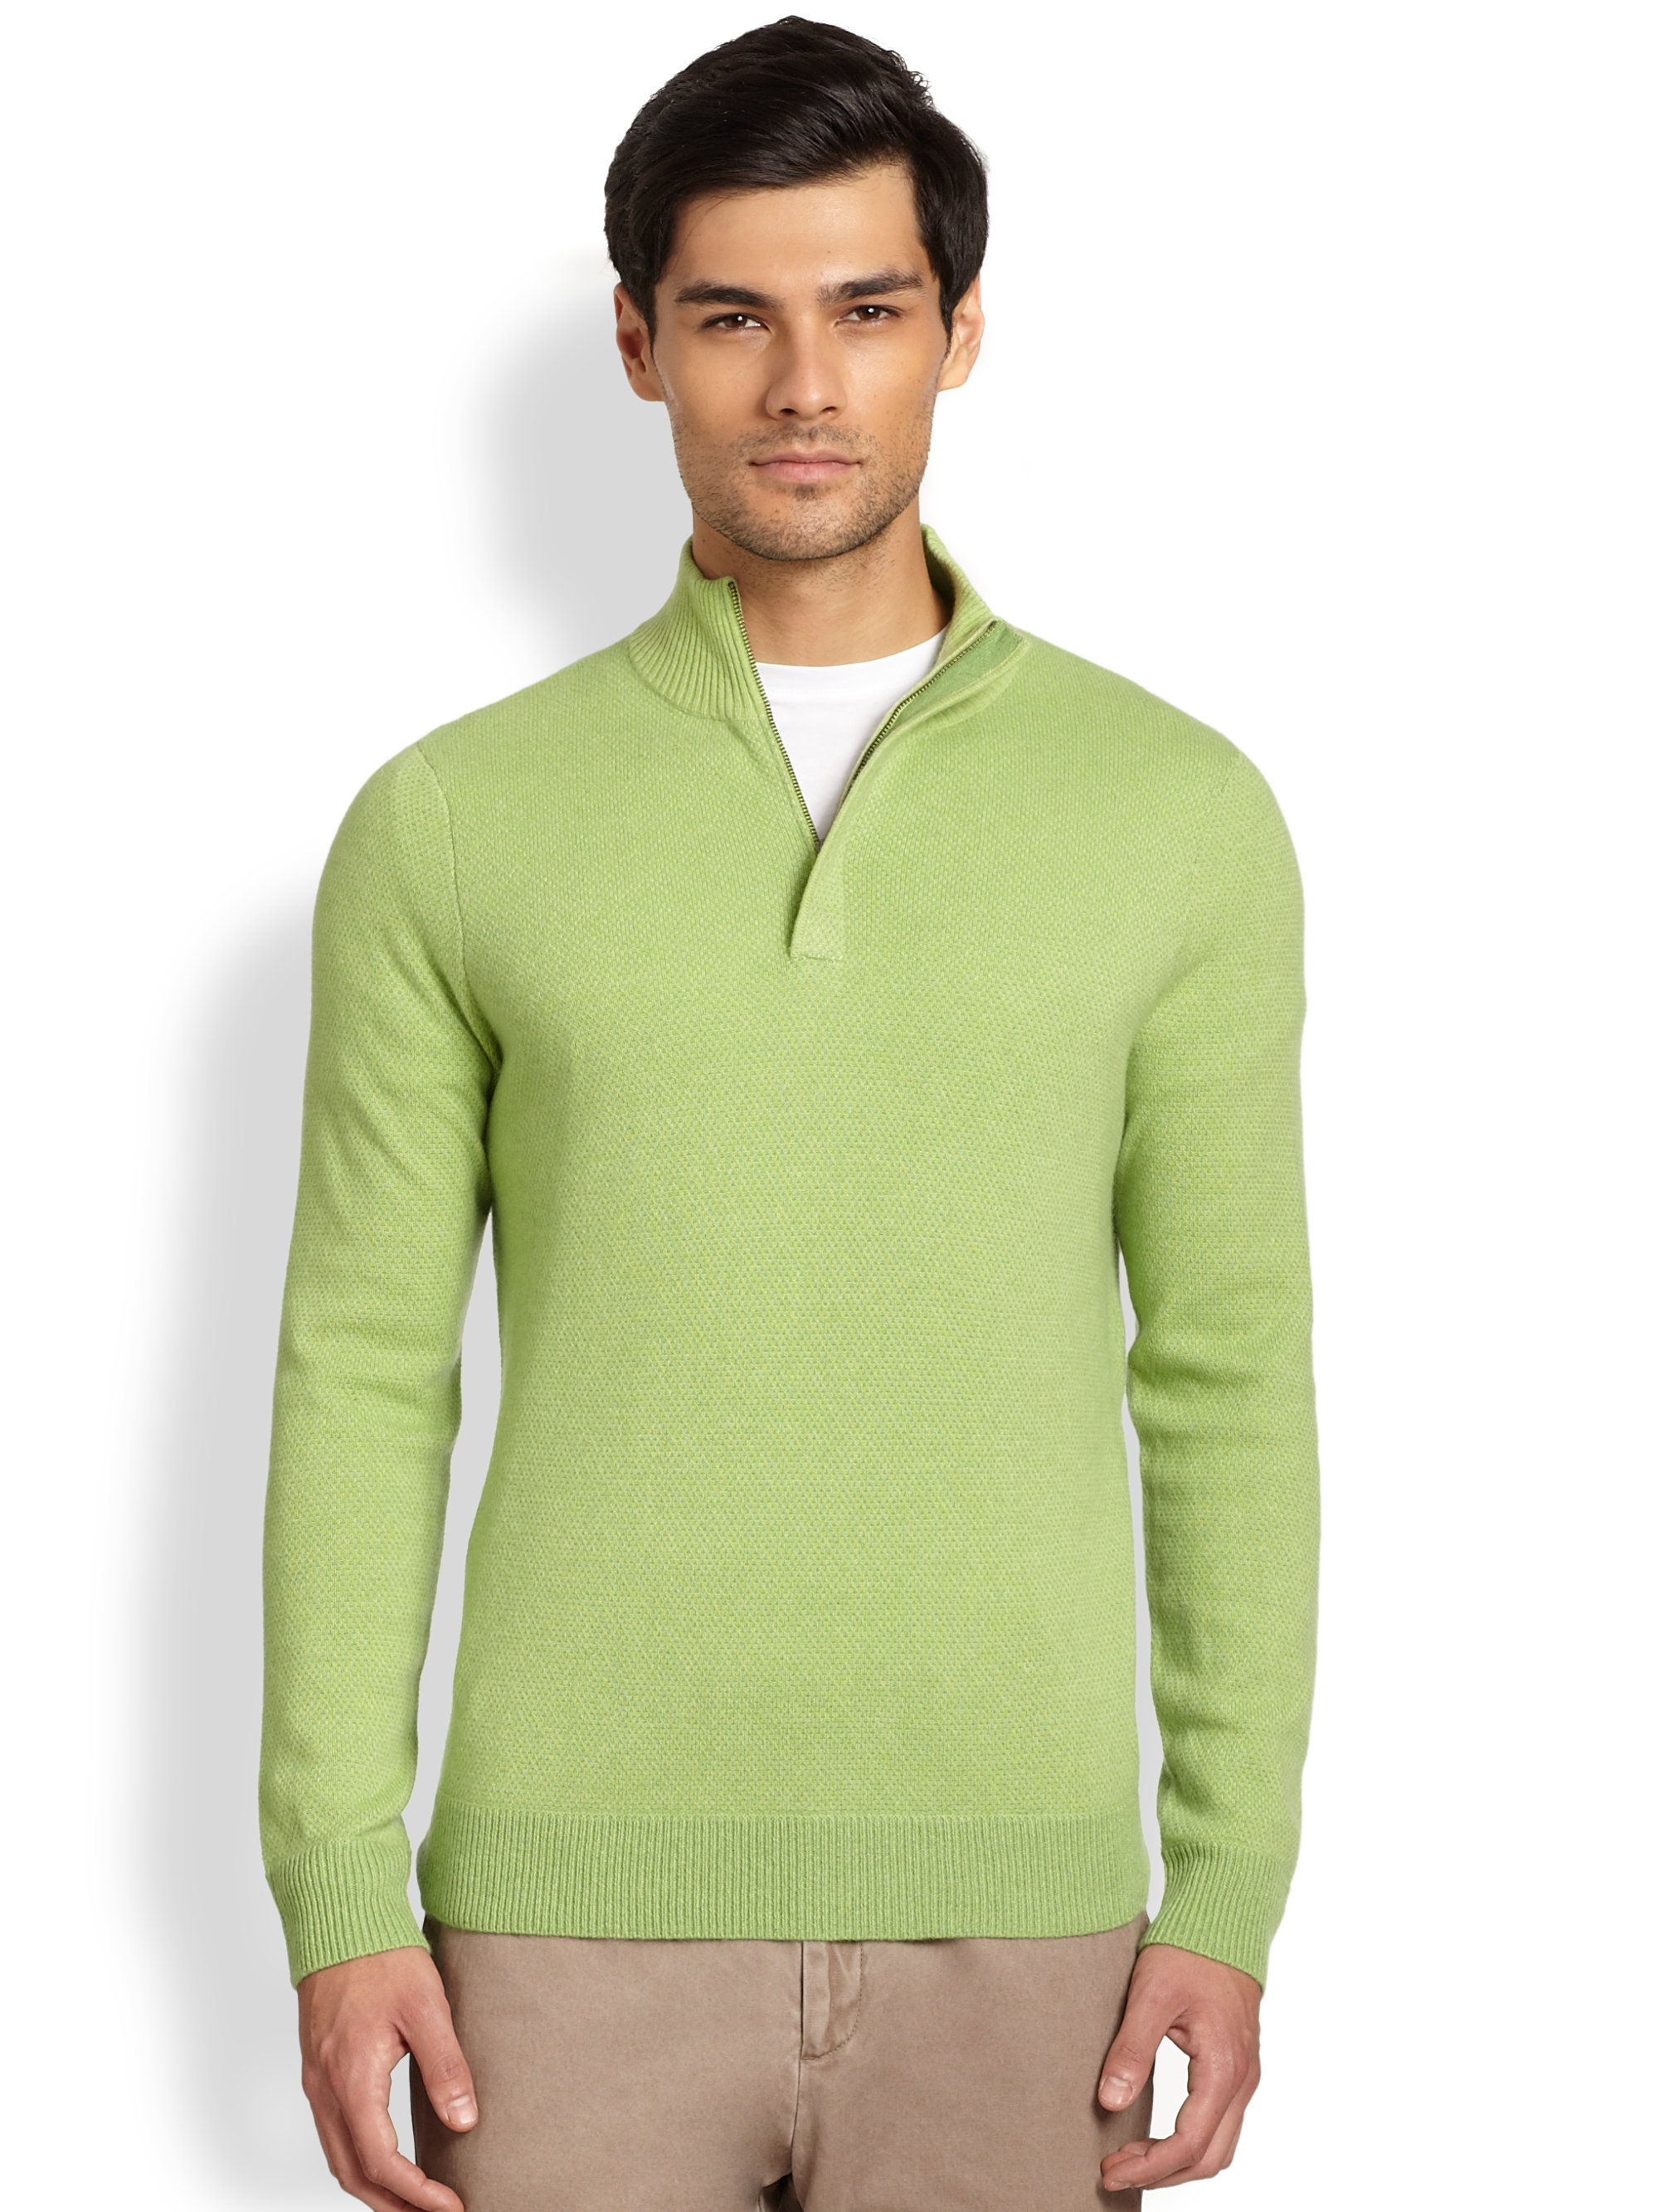 Lyst - Saks Fifth Avenue Birdseye Halfzip Cashmere Sweater in Green for Men